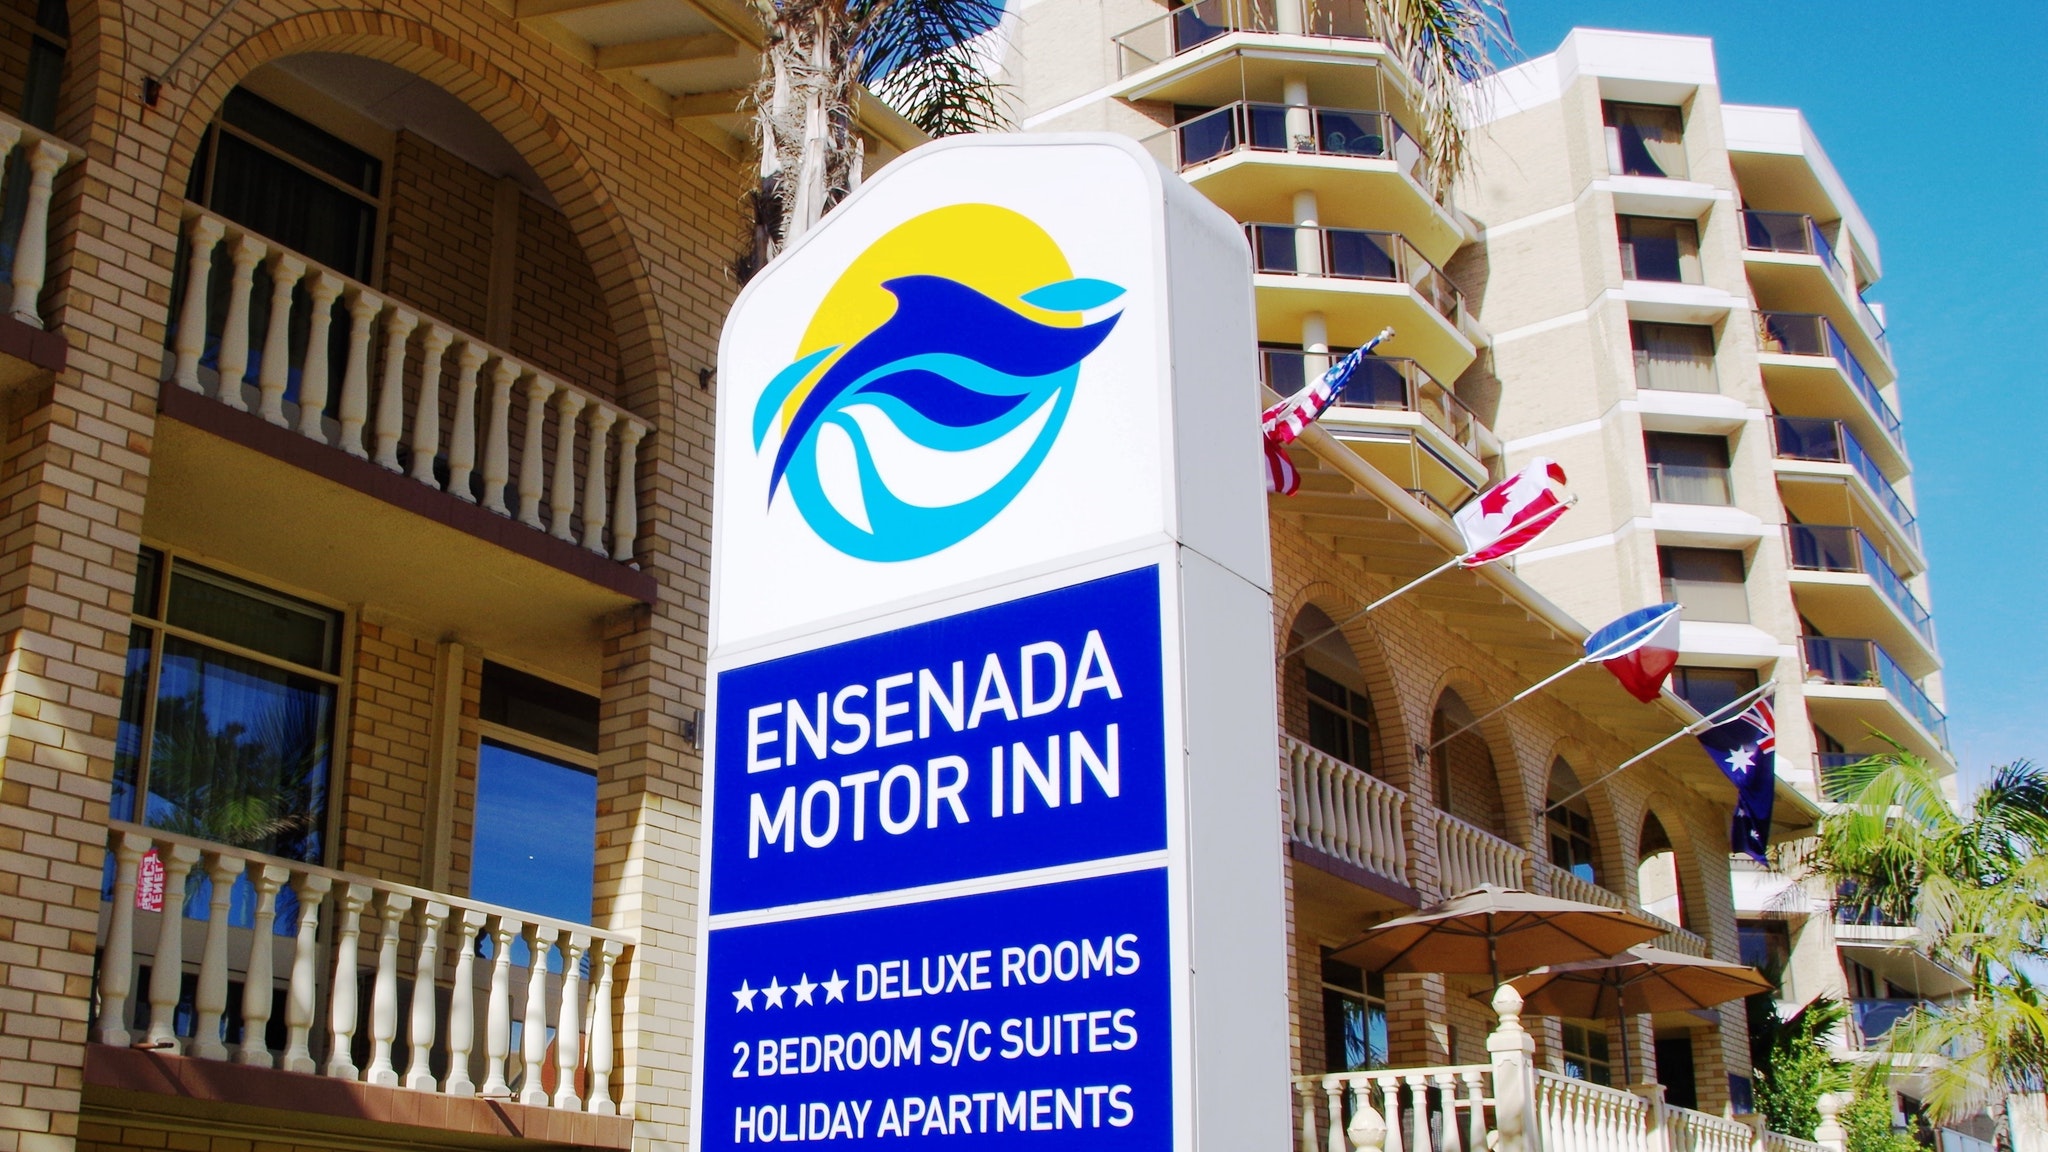 Ensenada Motor Inn And Suites - Accommodation Melbourne 11